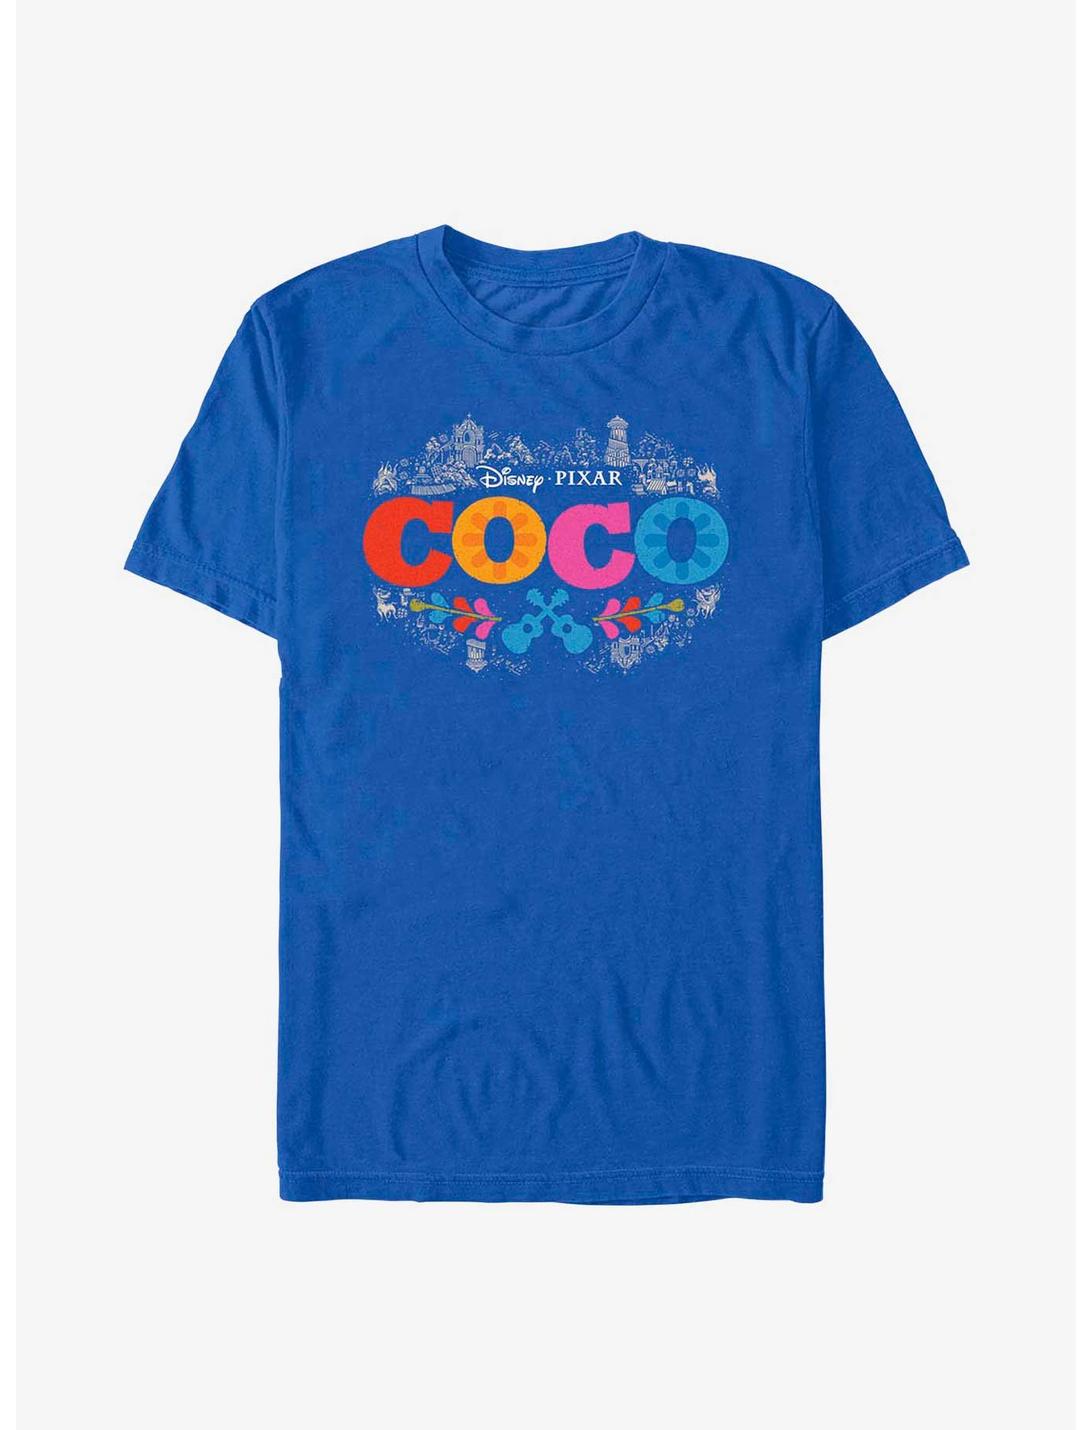 Disney Pixar Coco Brayer Coco T-Shirt, ROYAL, hi-res